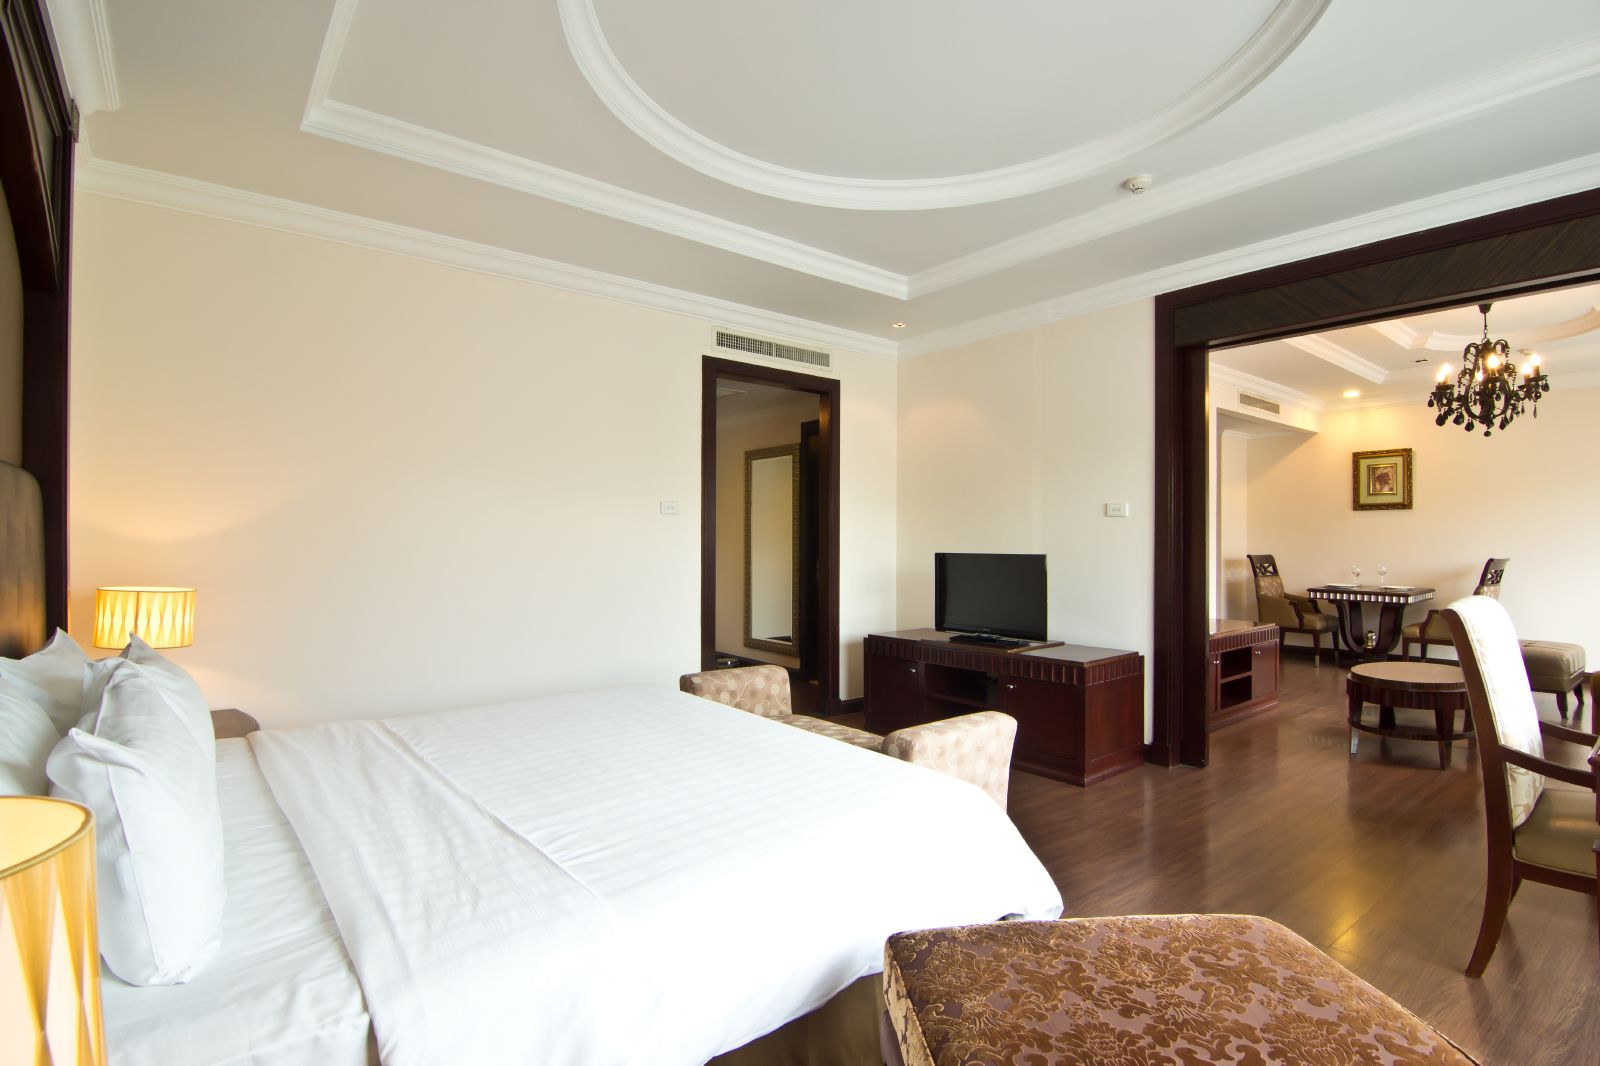 Renaissance Residence Pattaya. One bedroom suite